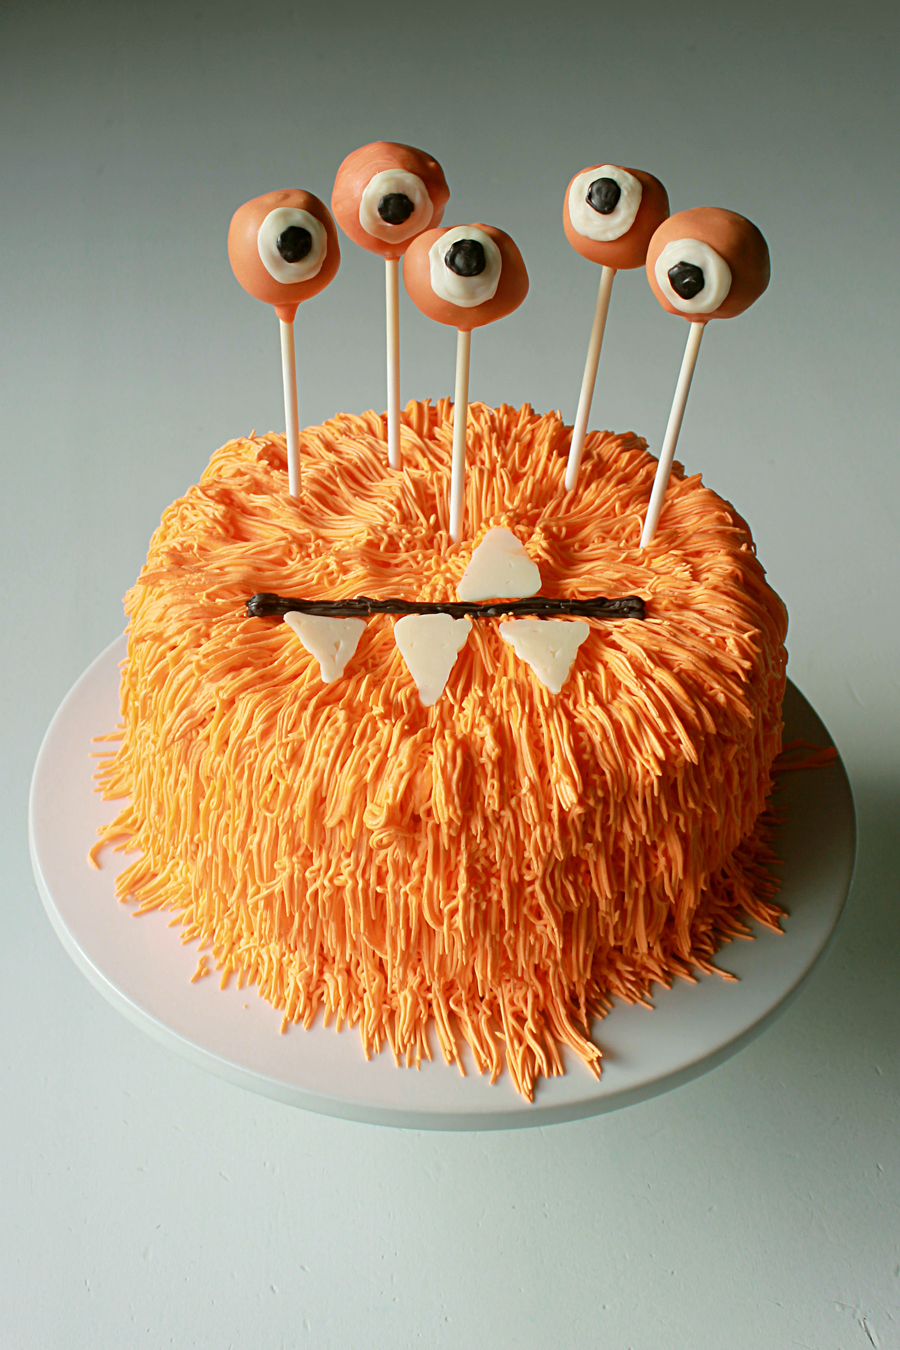 Halloween Monster Birthday Cake